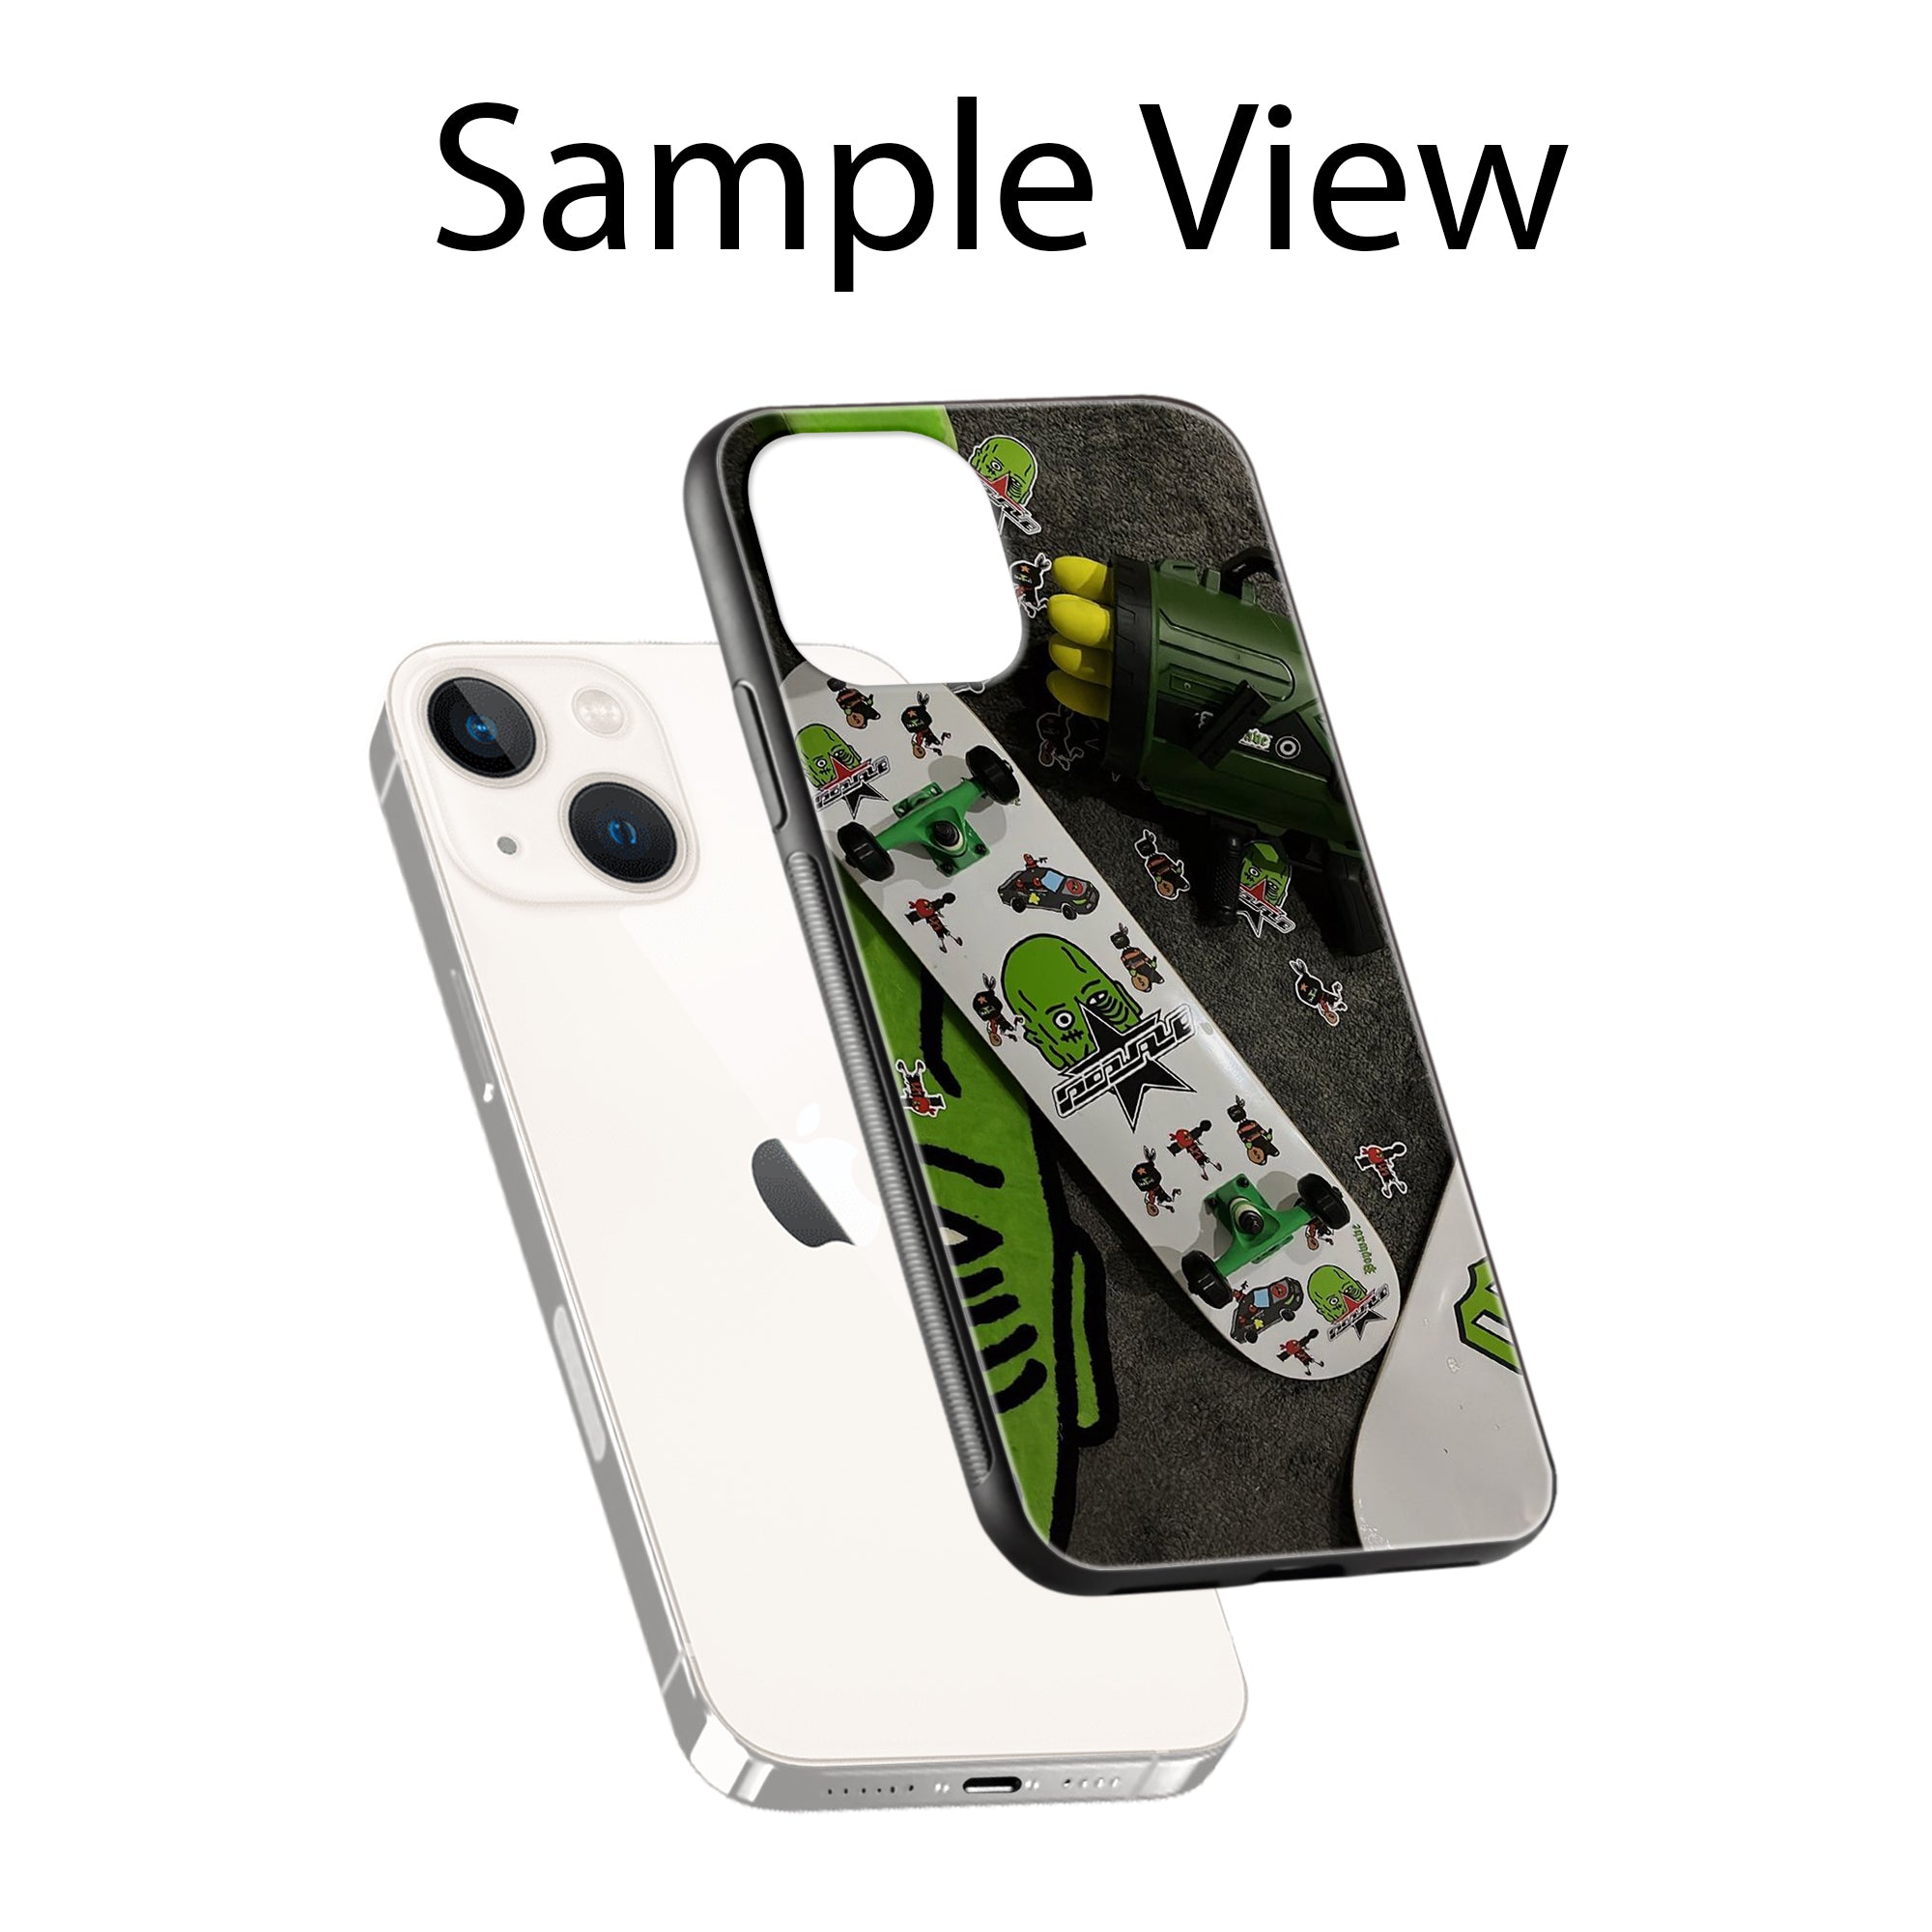 Buy Hulk Skateboard Metal-Silicon Back Mobile Phone Case/Cover For Samsung S22 Online